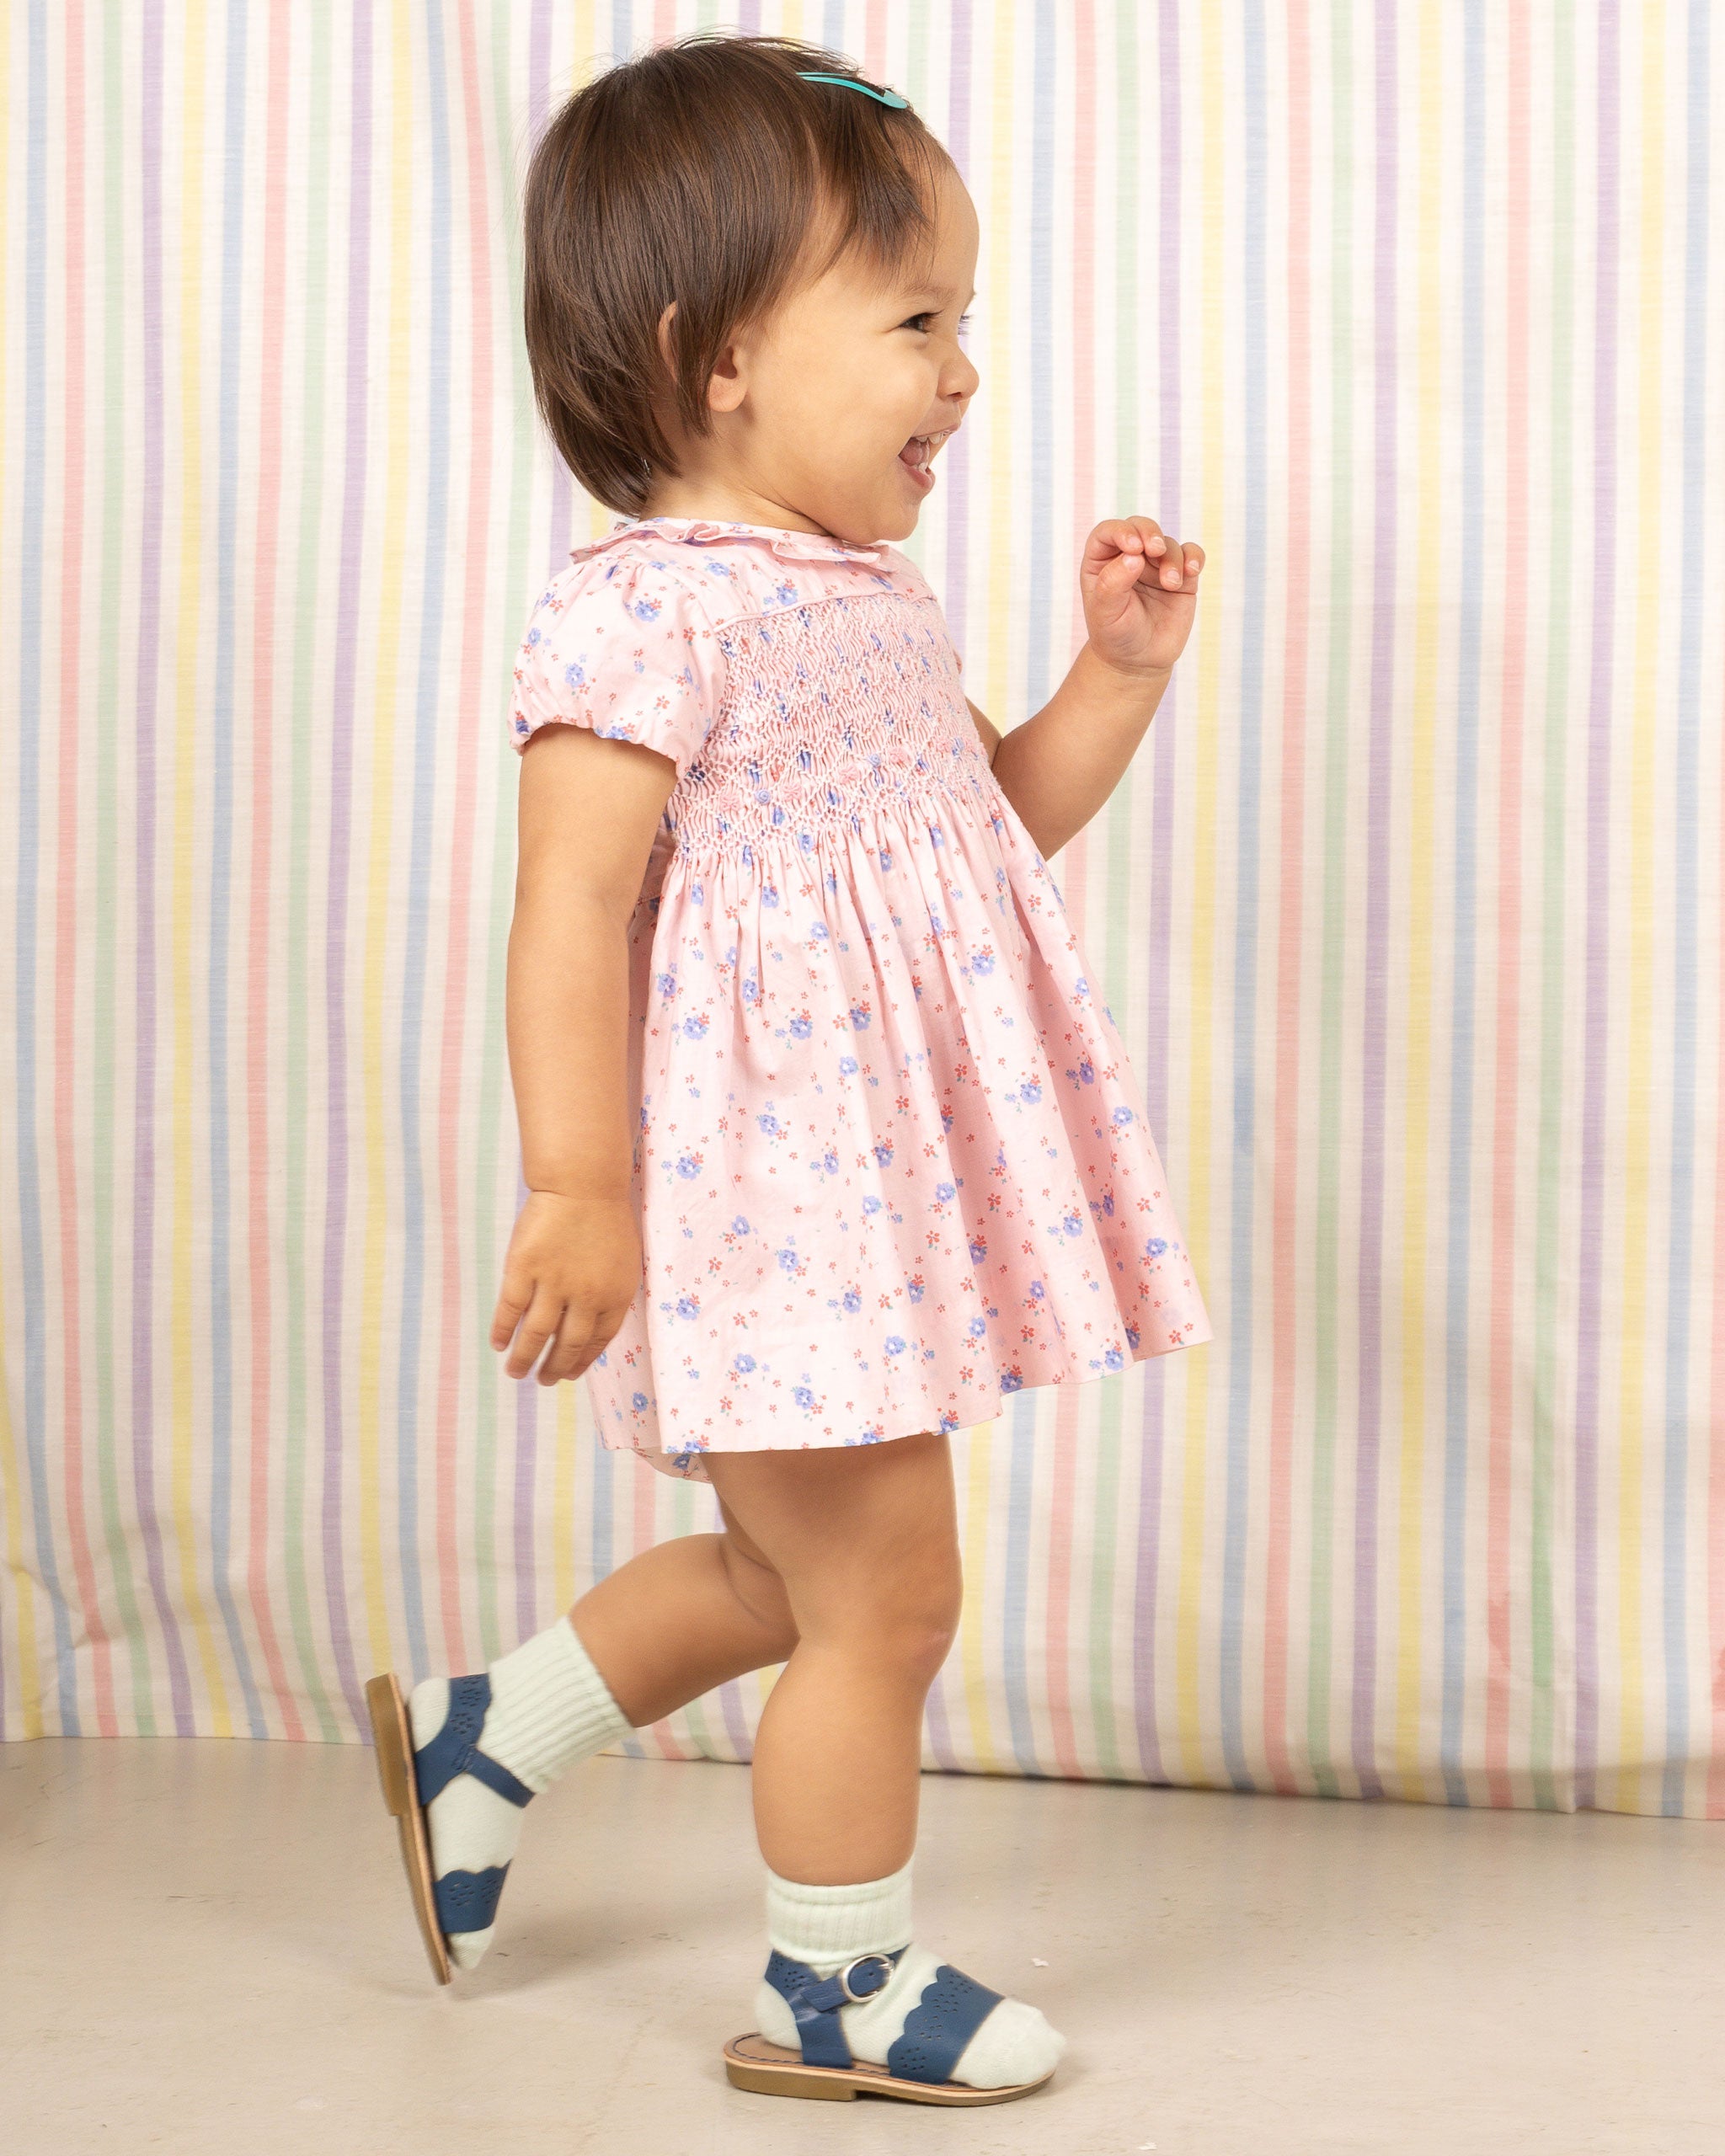 Pink Summer smock dress worn by baby model